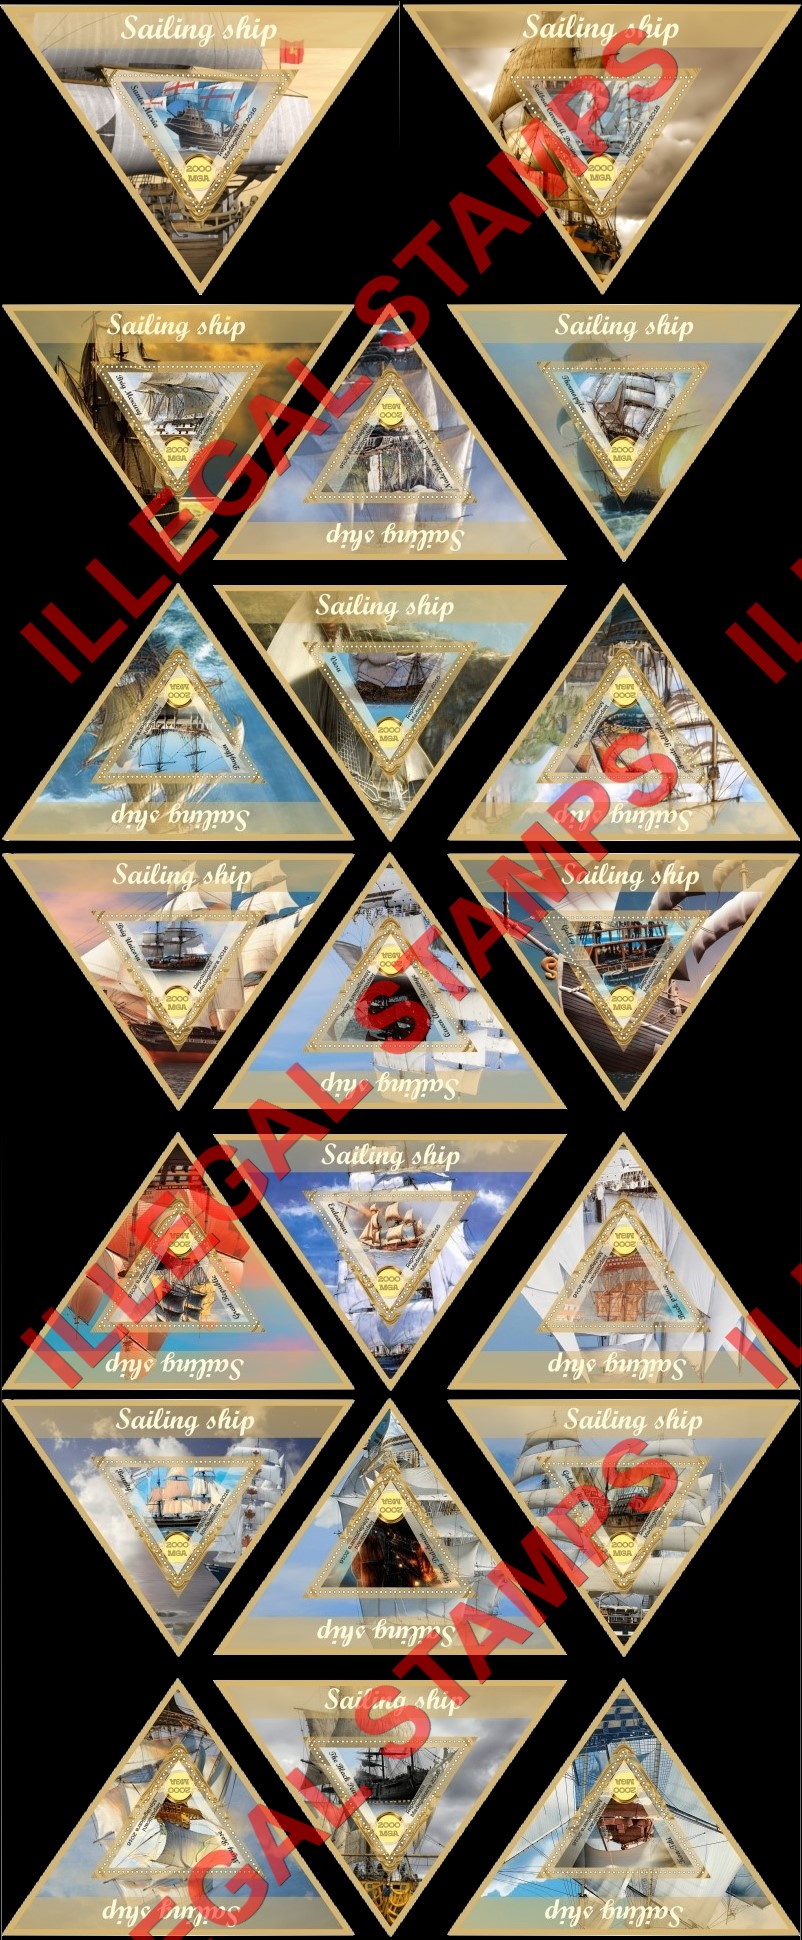 Madagascar 2016 Sailing Ships Illegal Stamp Souvenir Sheets of 1